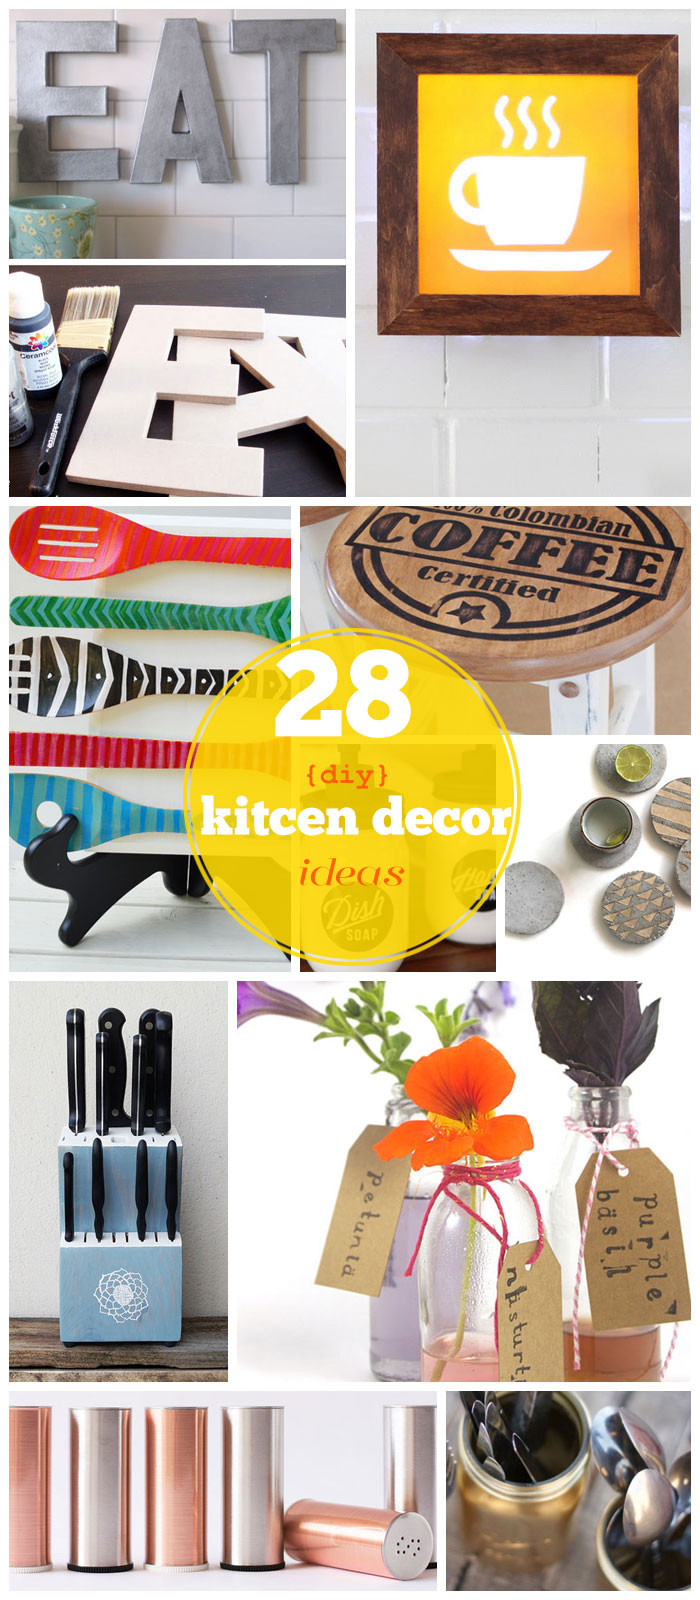 Best ideas about DIY Kitchen Decorating Ideas
. Save or Pin 28 DIY Kitchen Decorating Ideas on a Bud Now.